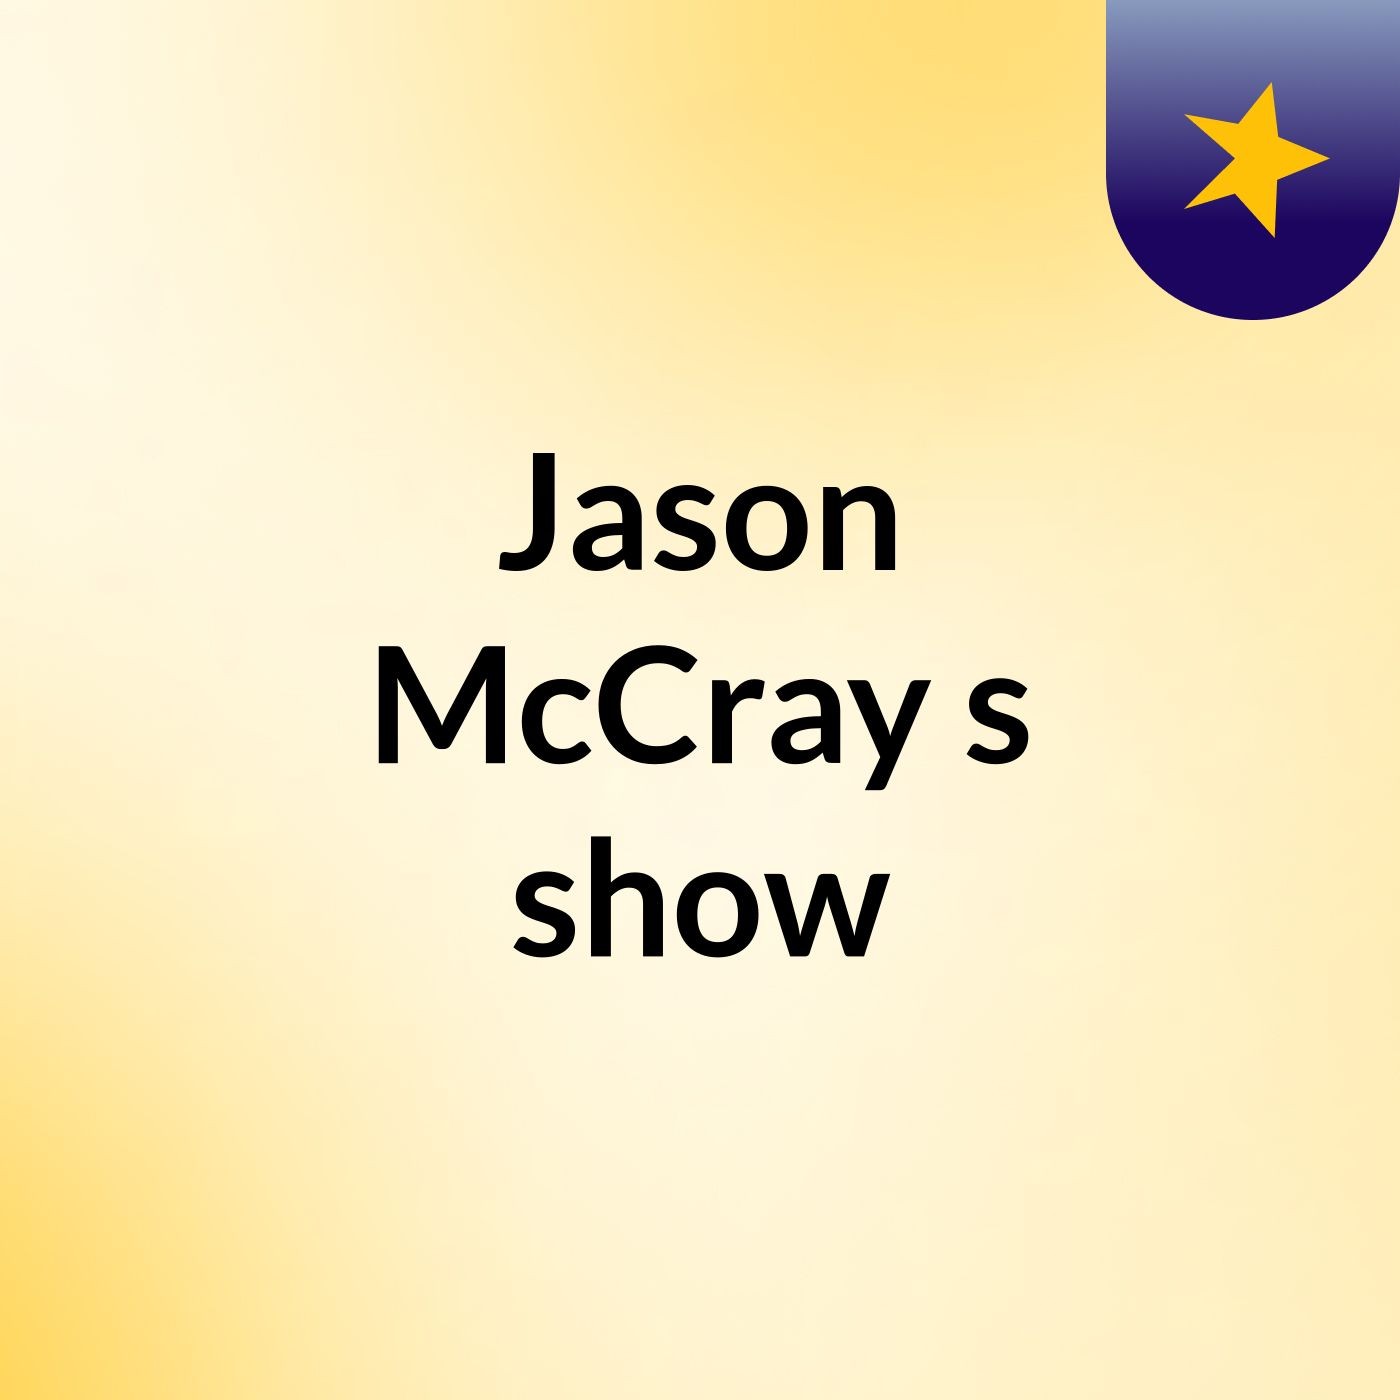 Jason McCray's show